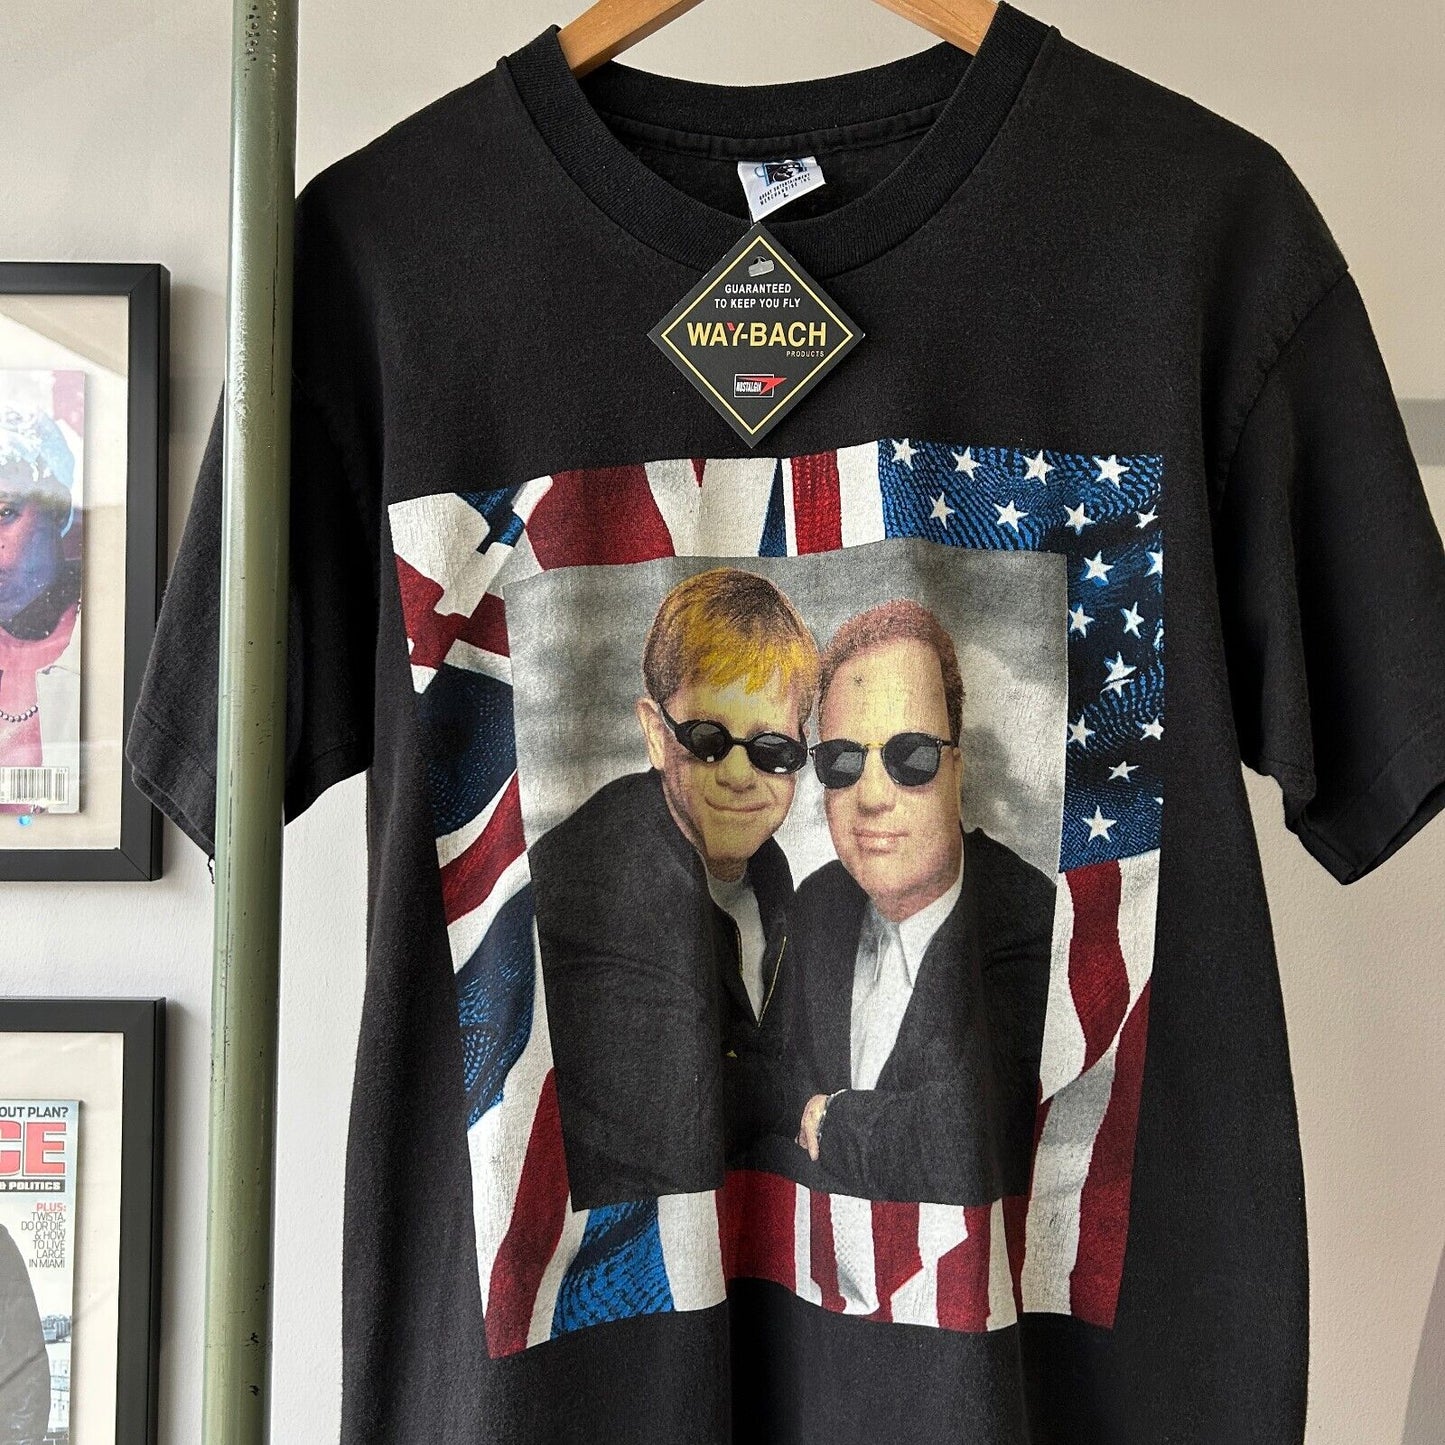 VINTAGE 1994 | Elton John & Billey Joel Tour Band T-Shirt sz M-L Adult